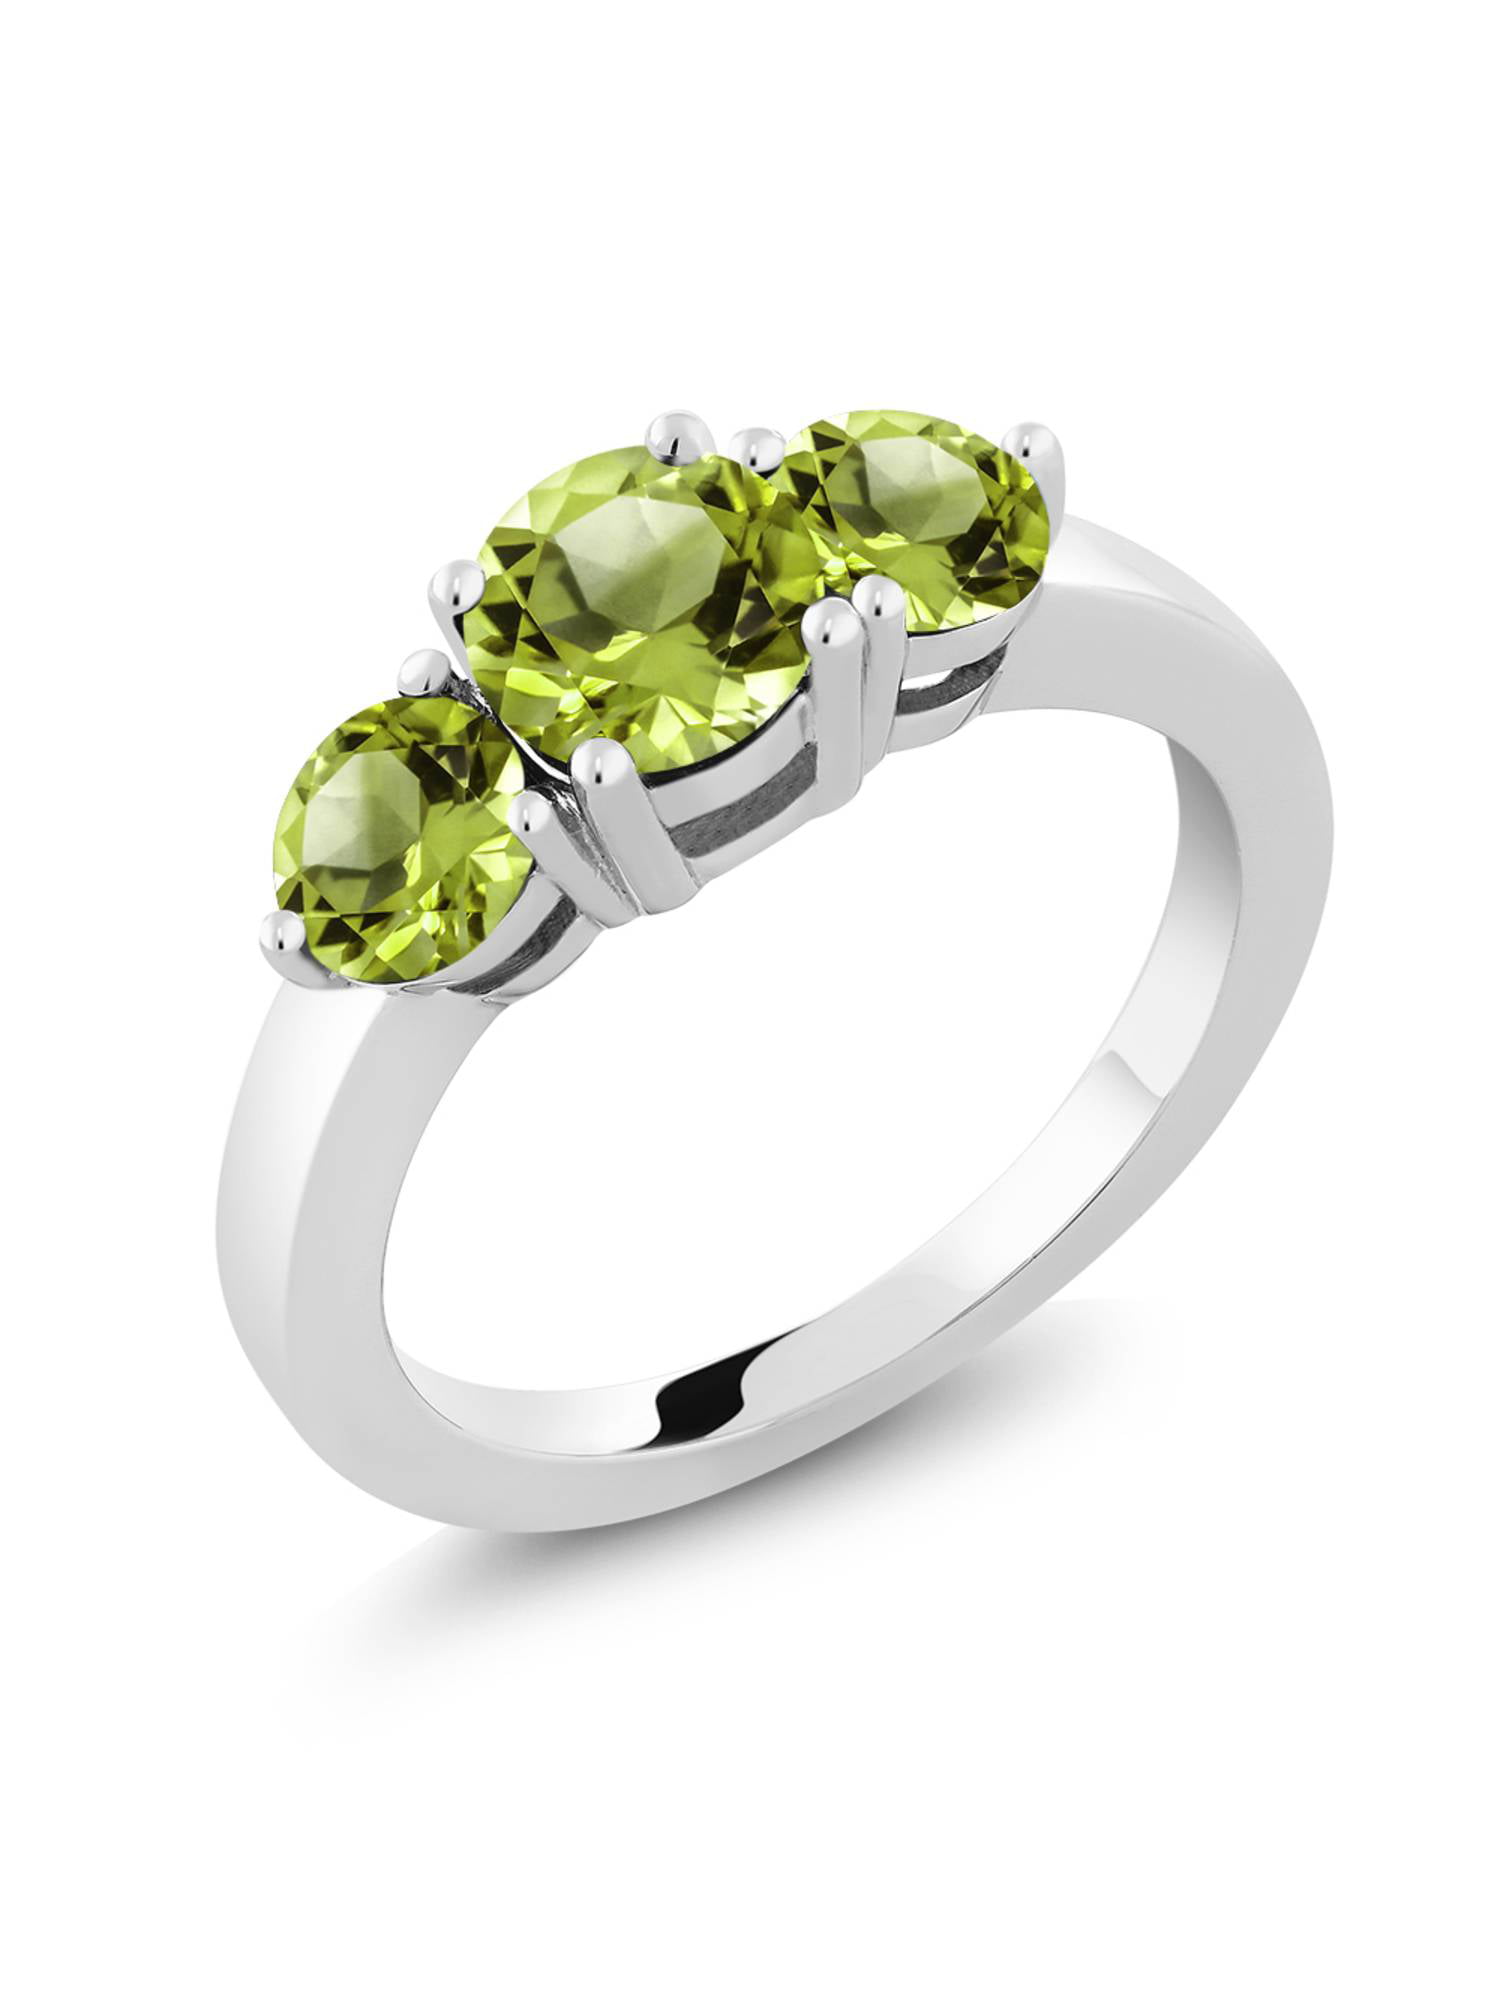 925 Silver Green Peridot Nice Gemstone Ring jents Jewelry Items Gift for mom raw Stone Ring Nice Gemstone Round cabochon Peridot Rings 